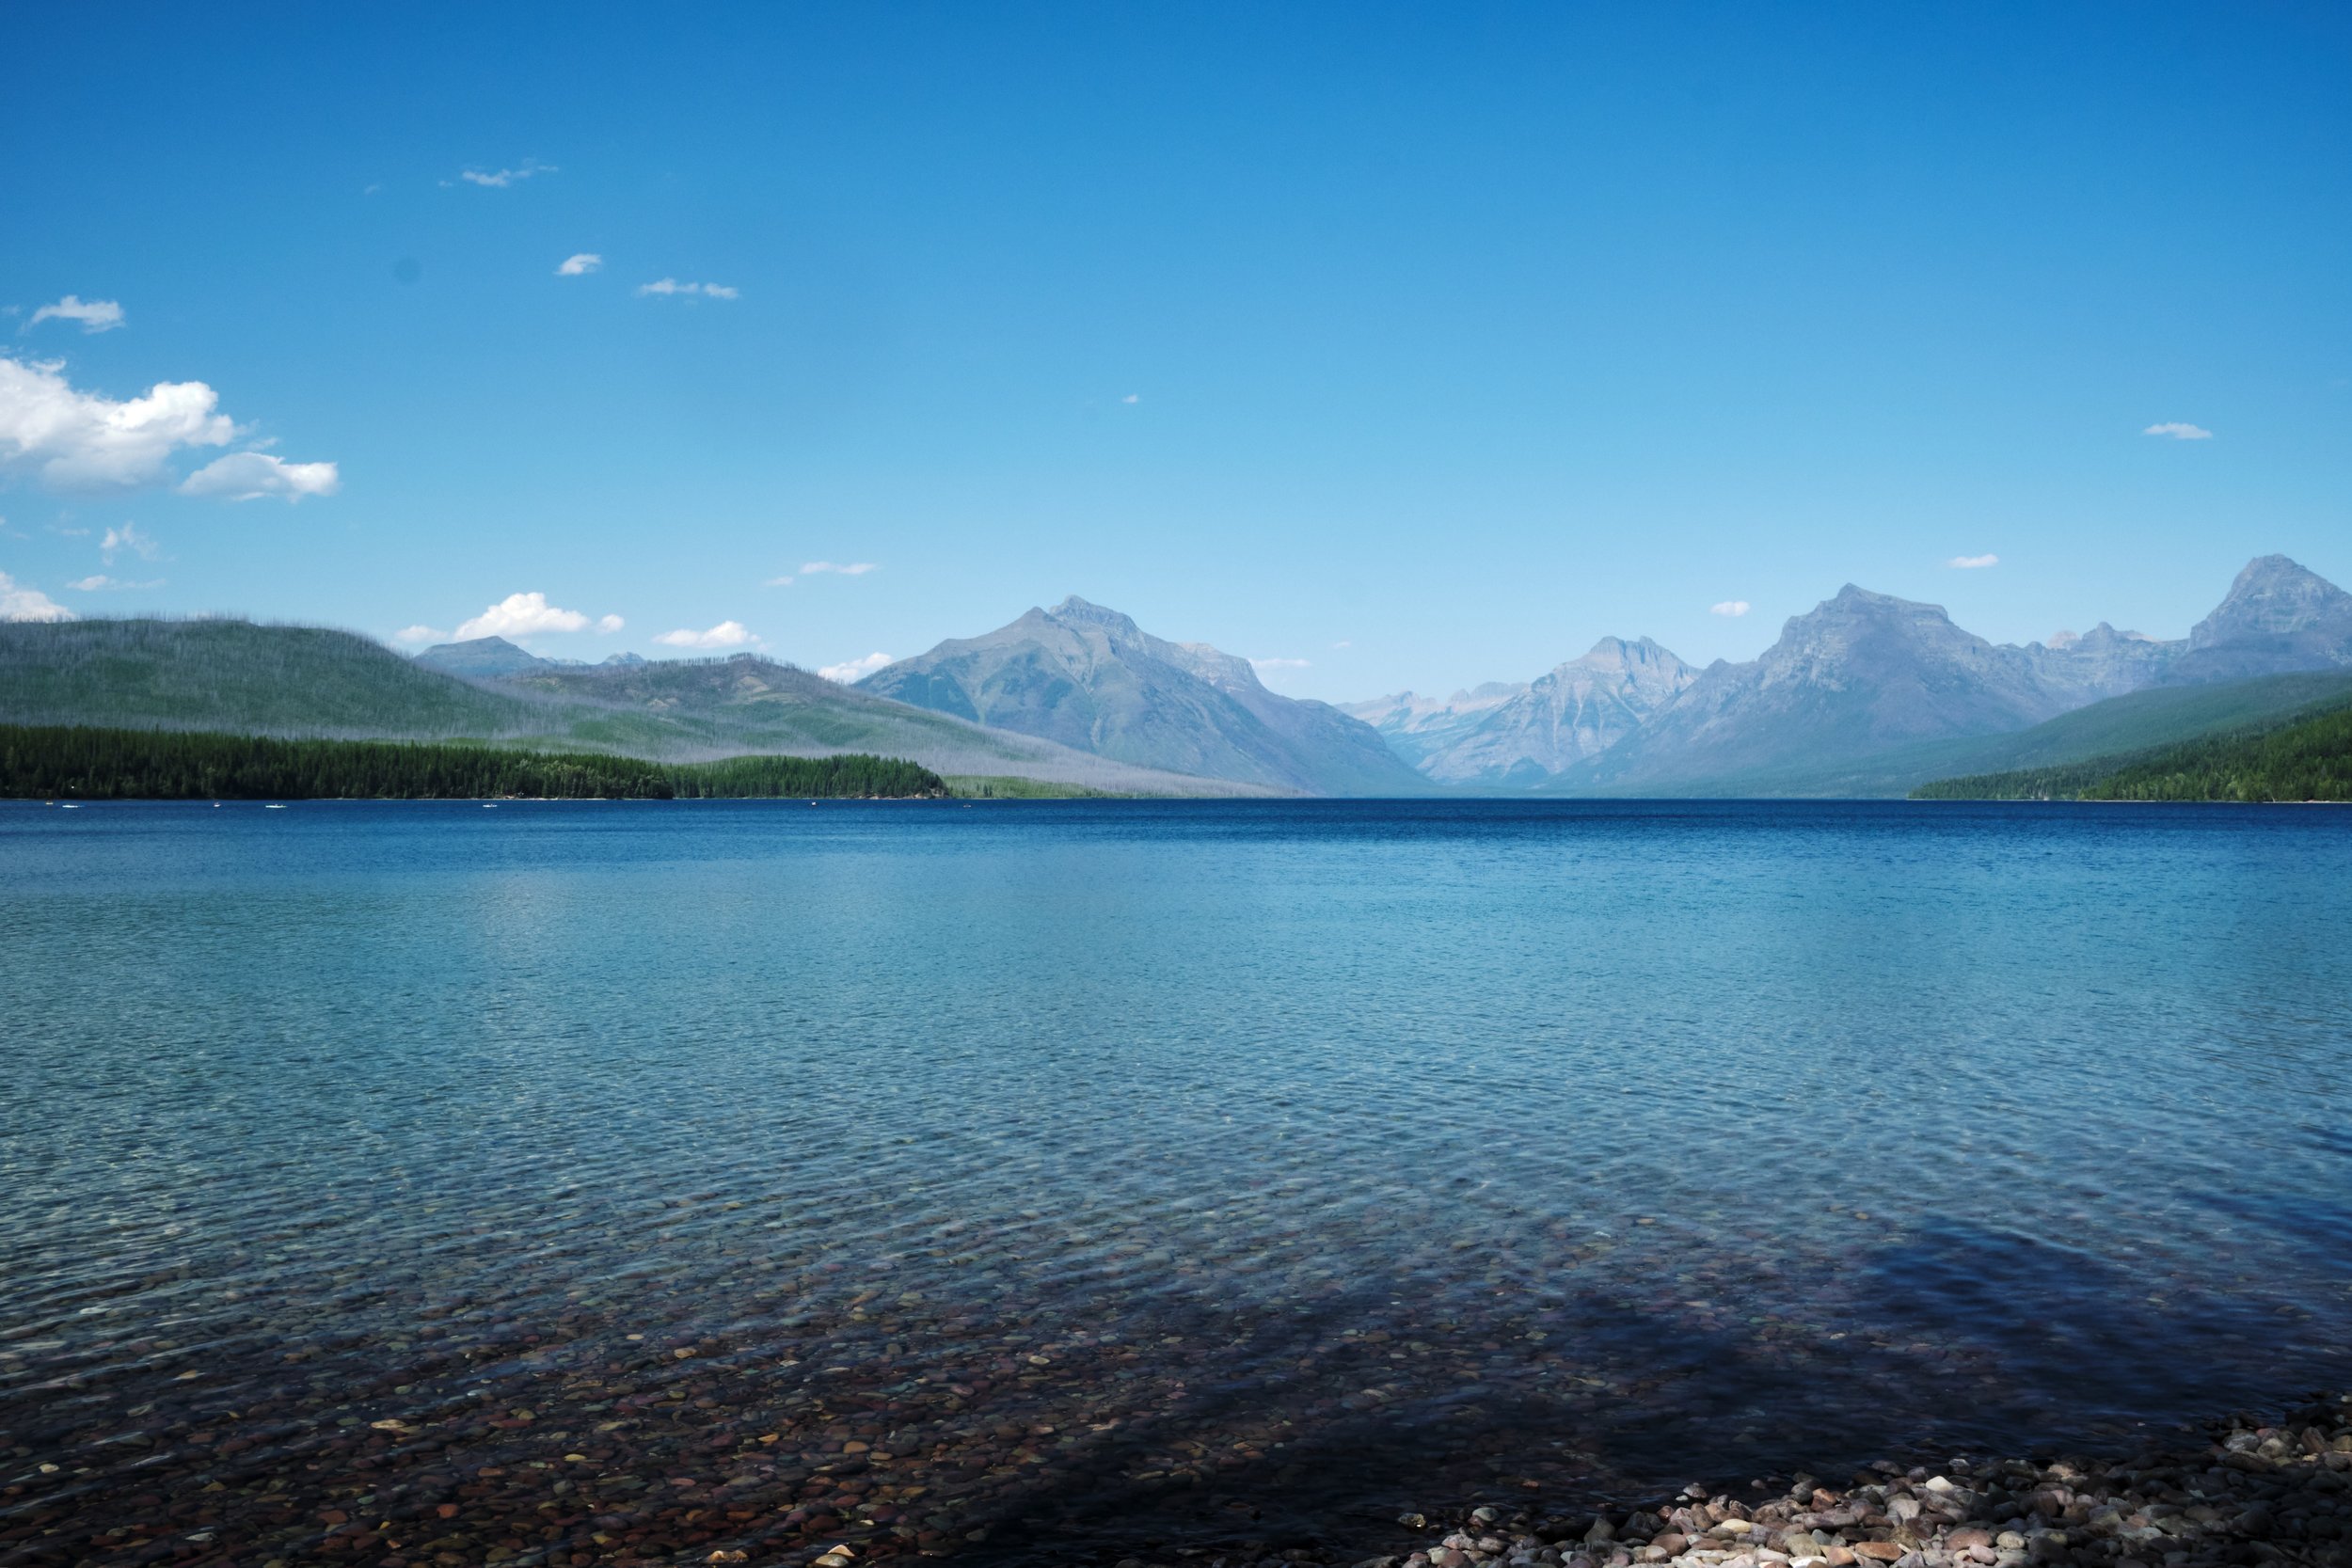  Lake McDonald, a glacial lake that is around 10 miles long. 